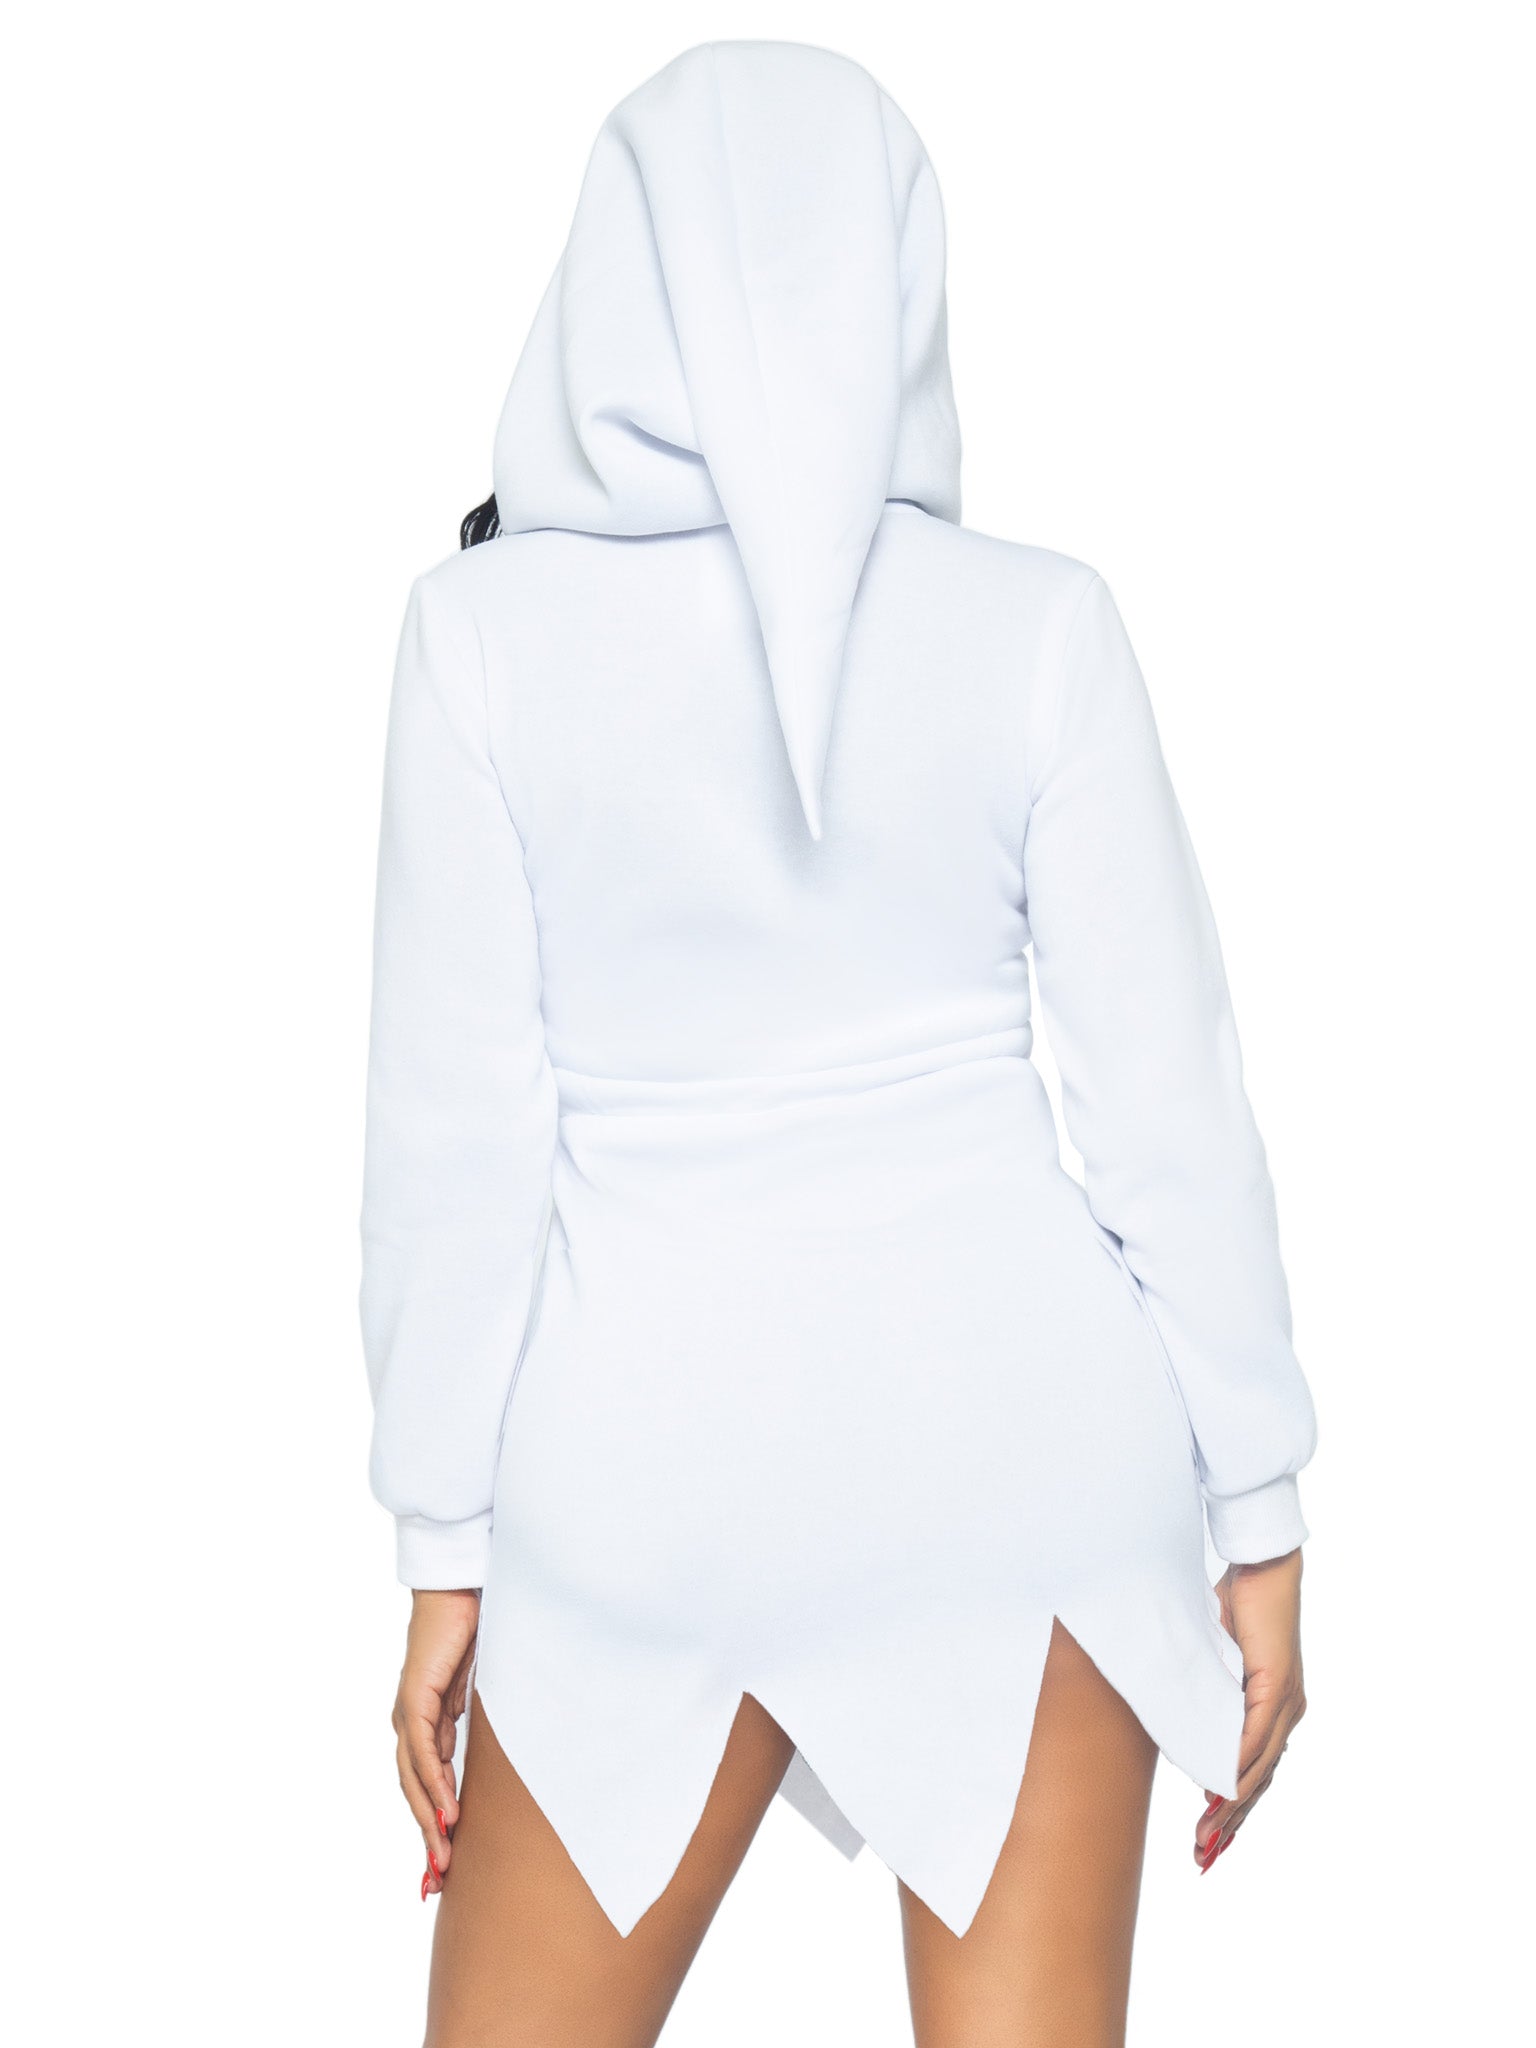 Leg Avenue Women's Fastball Fox Costume, White/Black, Small/Medium